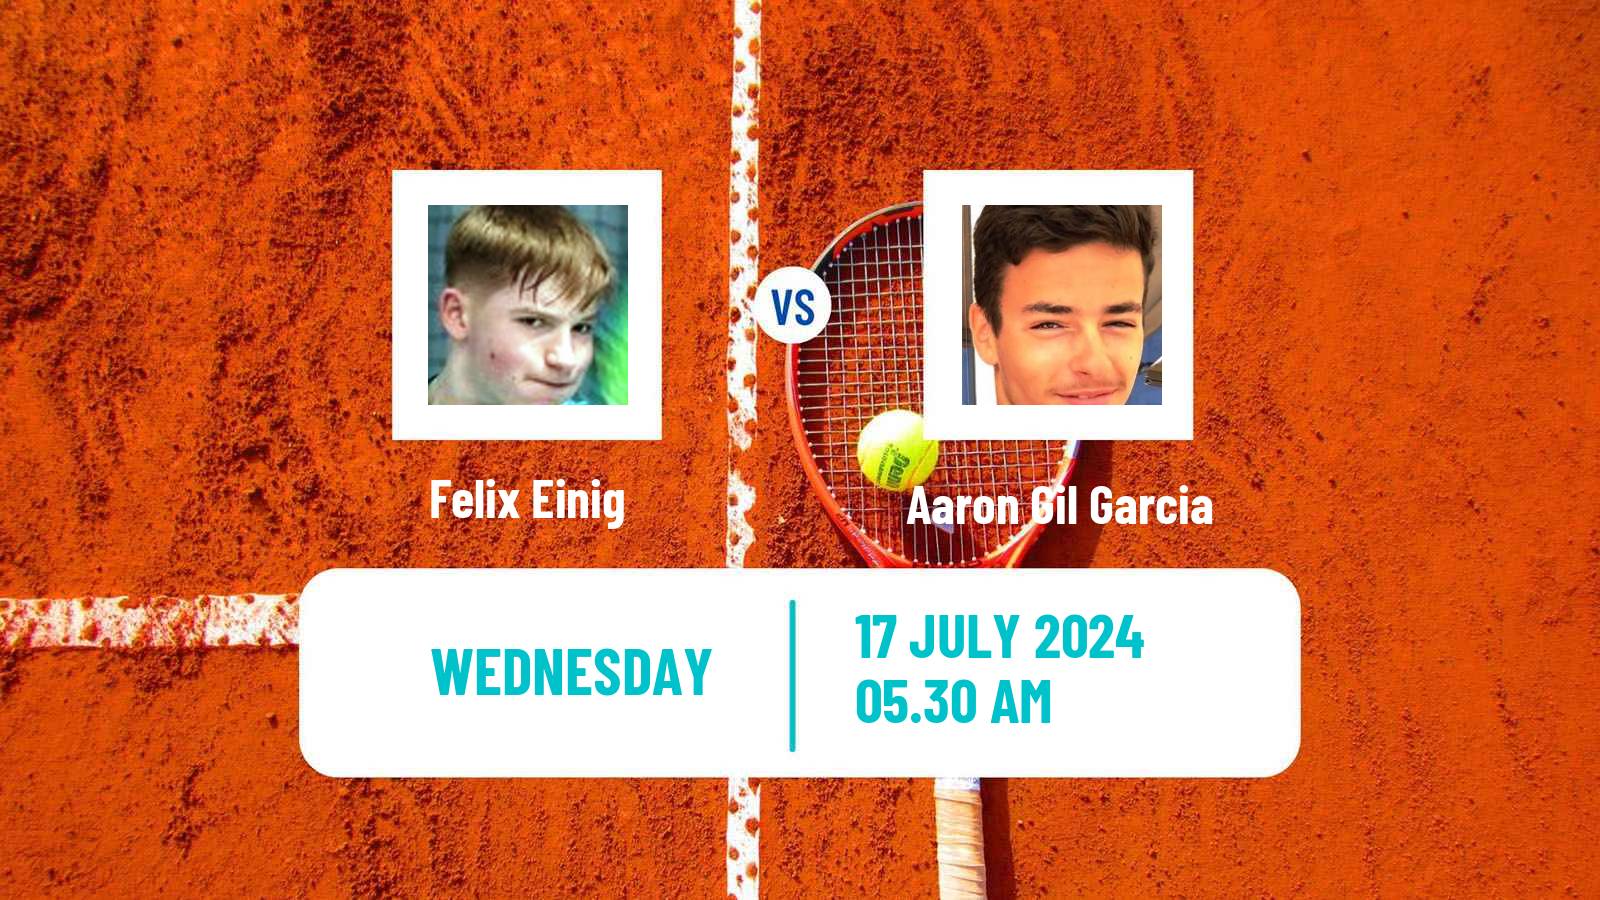 Tennis ITF M25 Esch Alzette 2 Men Felix Einig - Aaron Gil Garcia